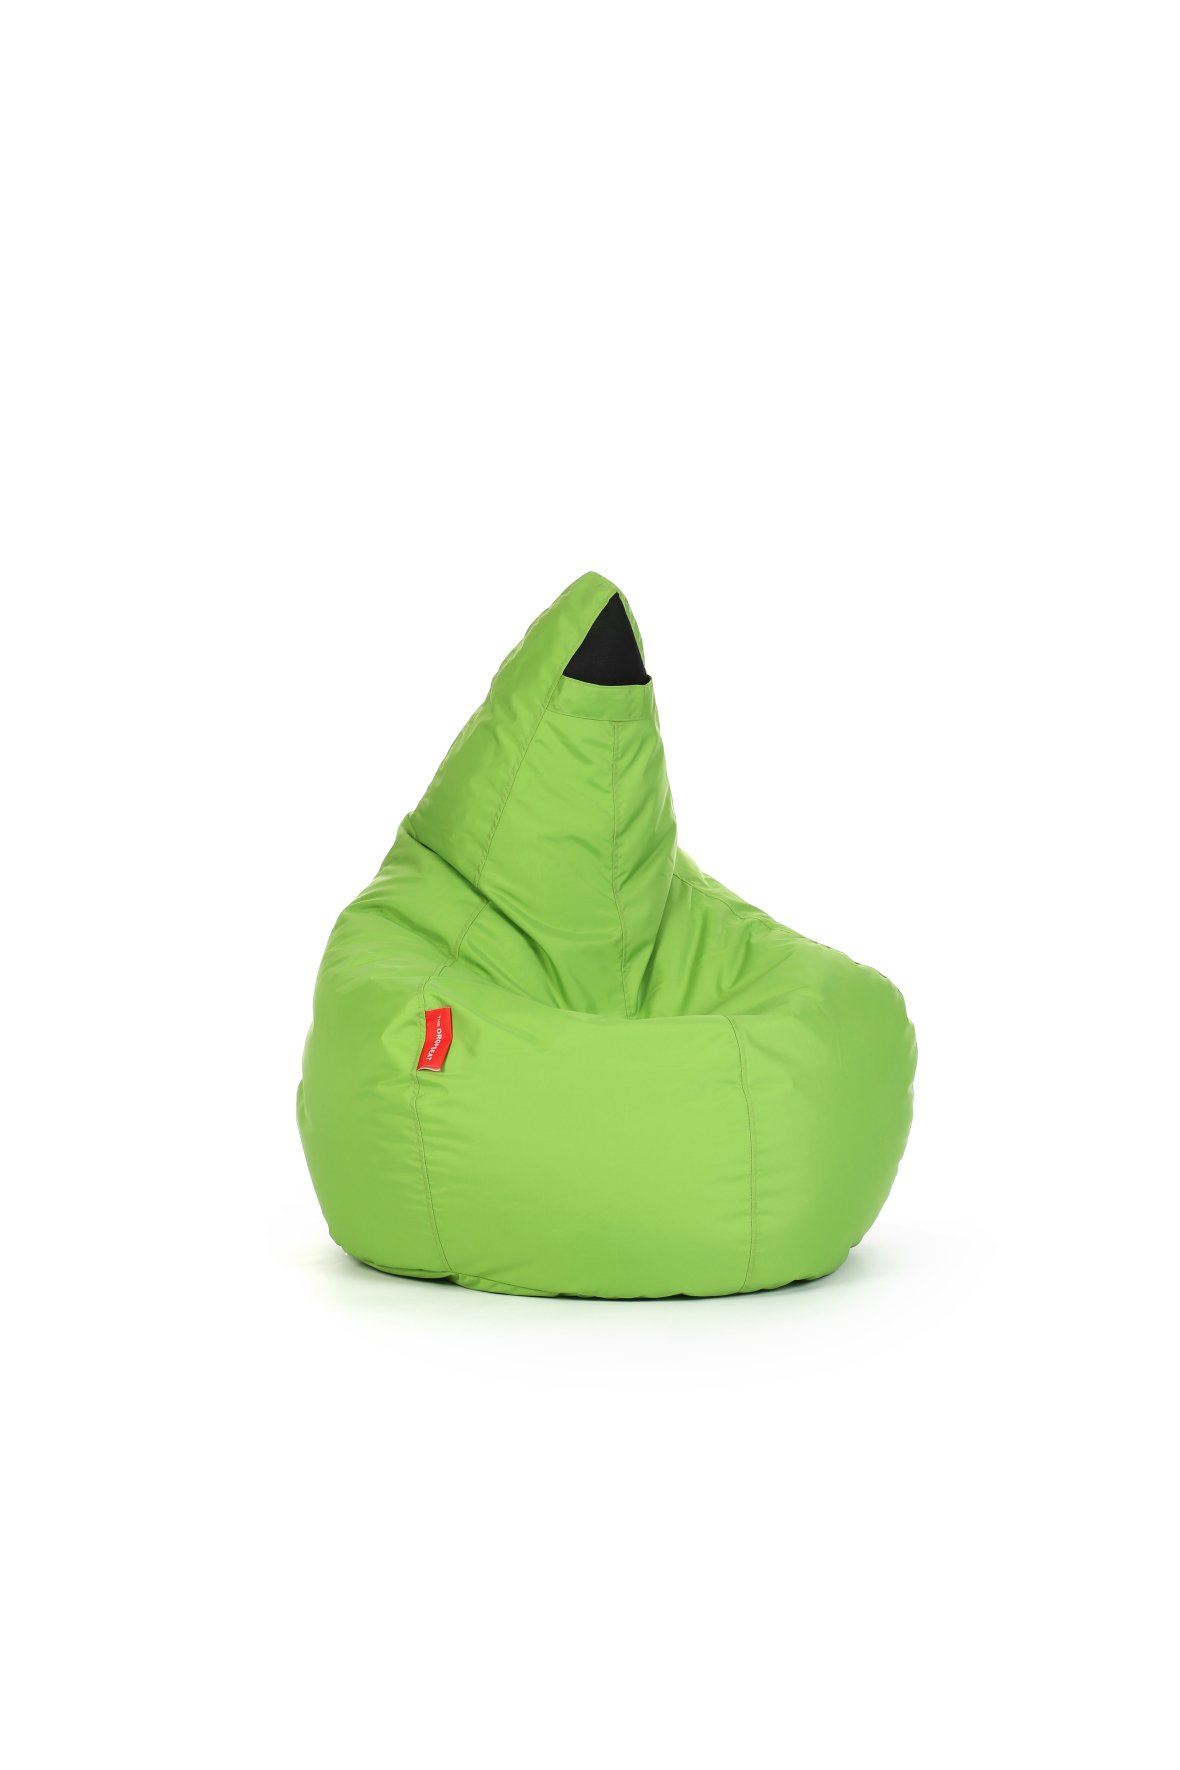 Dropseat Lime - Sit On It